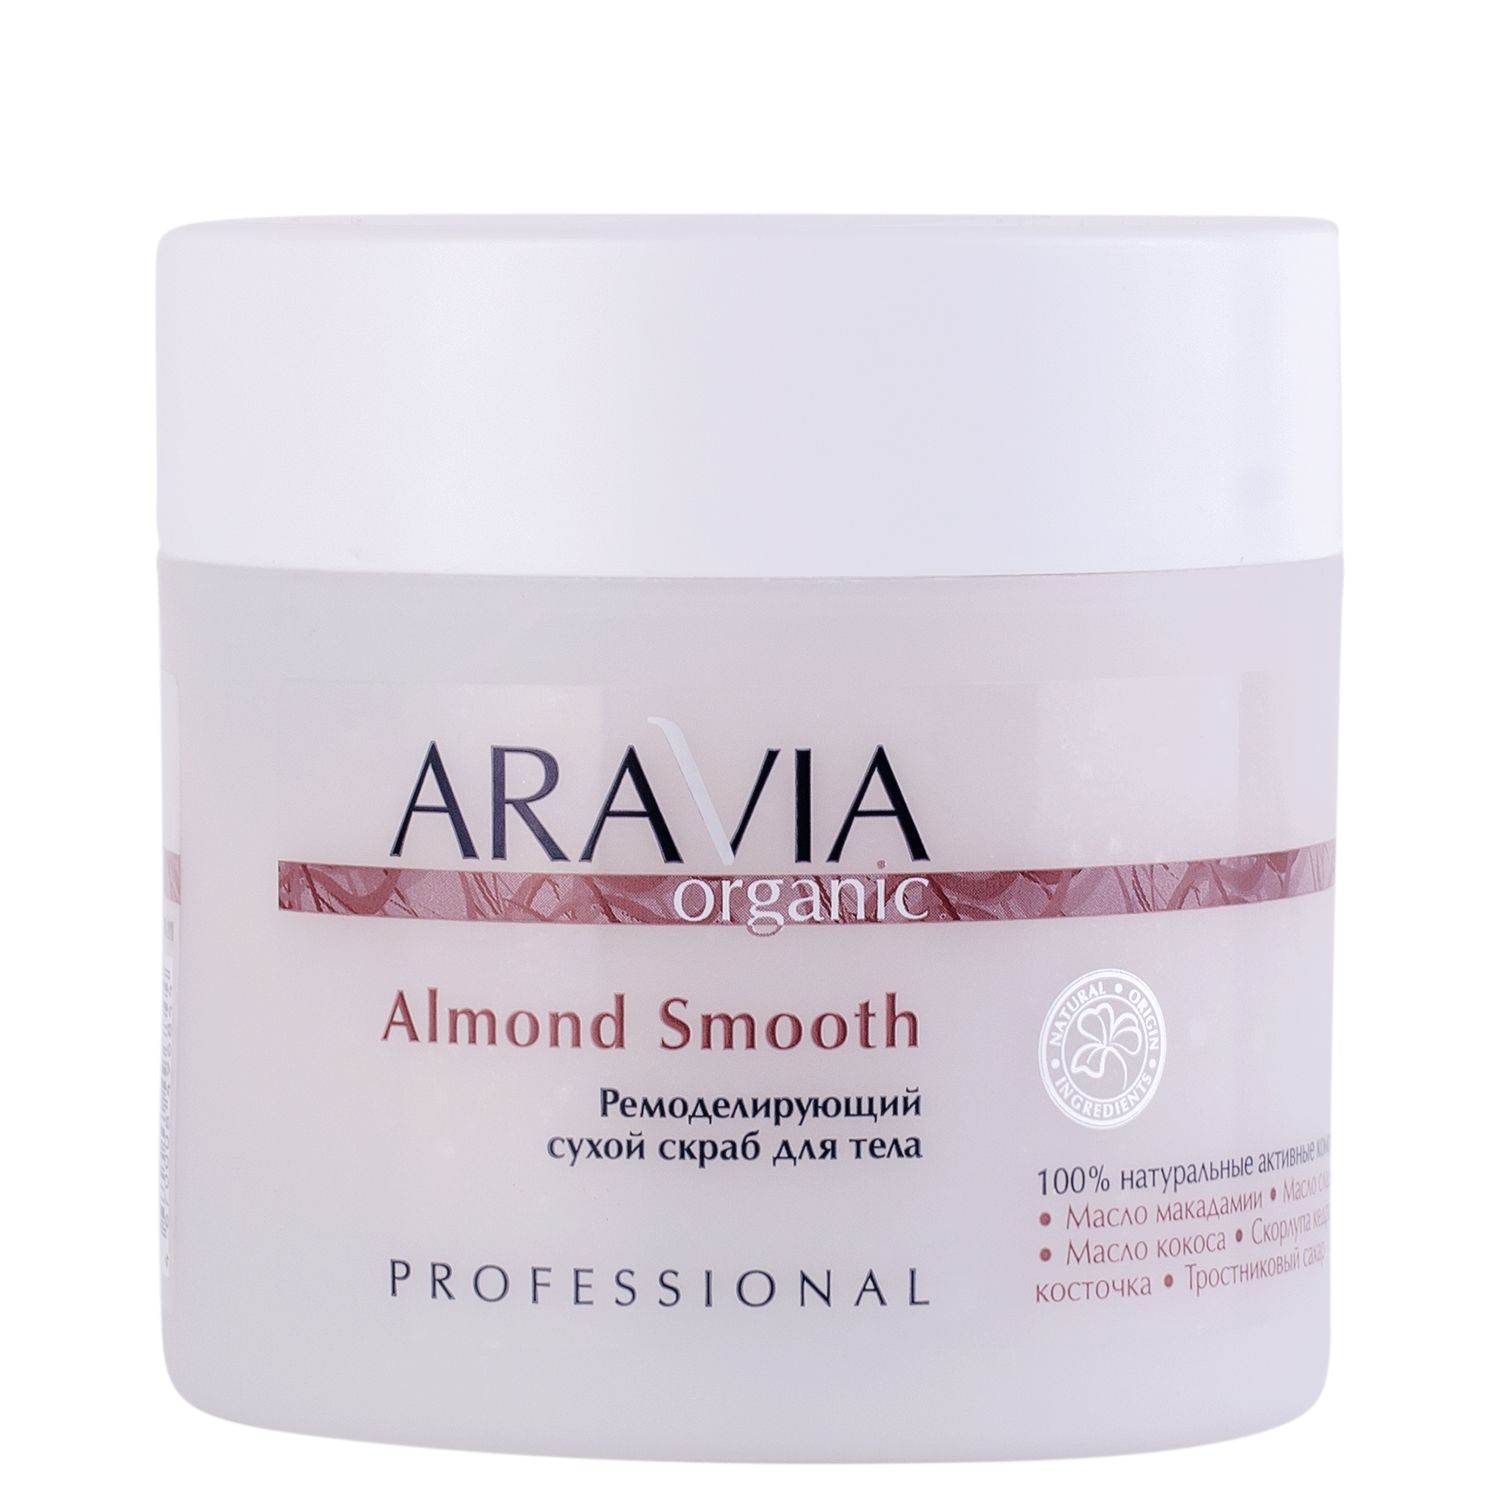 Aravia Organic Ремоделирующий сухой скраб для тела Almond Smooth, 300гр